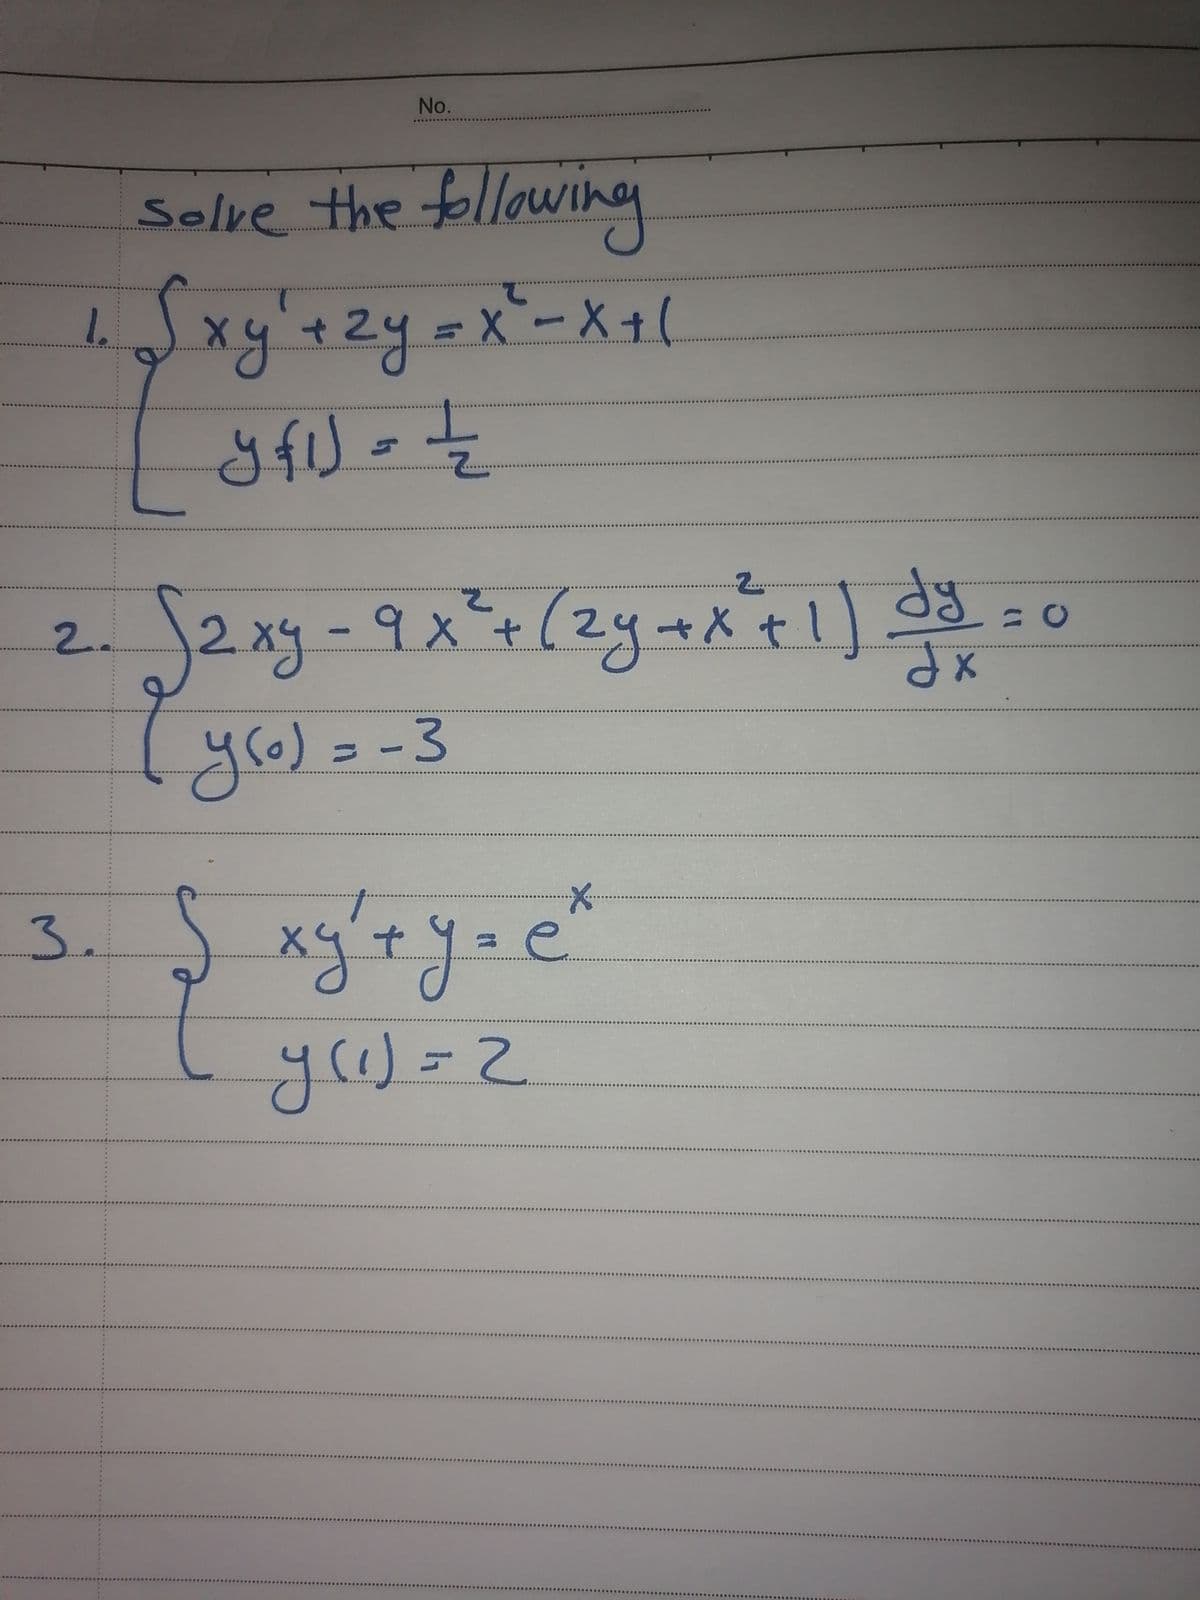 No.
Solve the following
1.
x4 +2y=X-ーX+(
2.2xy
9x+
(2y-
to
yro)
3. Ş xg't y=e"
y)=2
().
